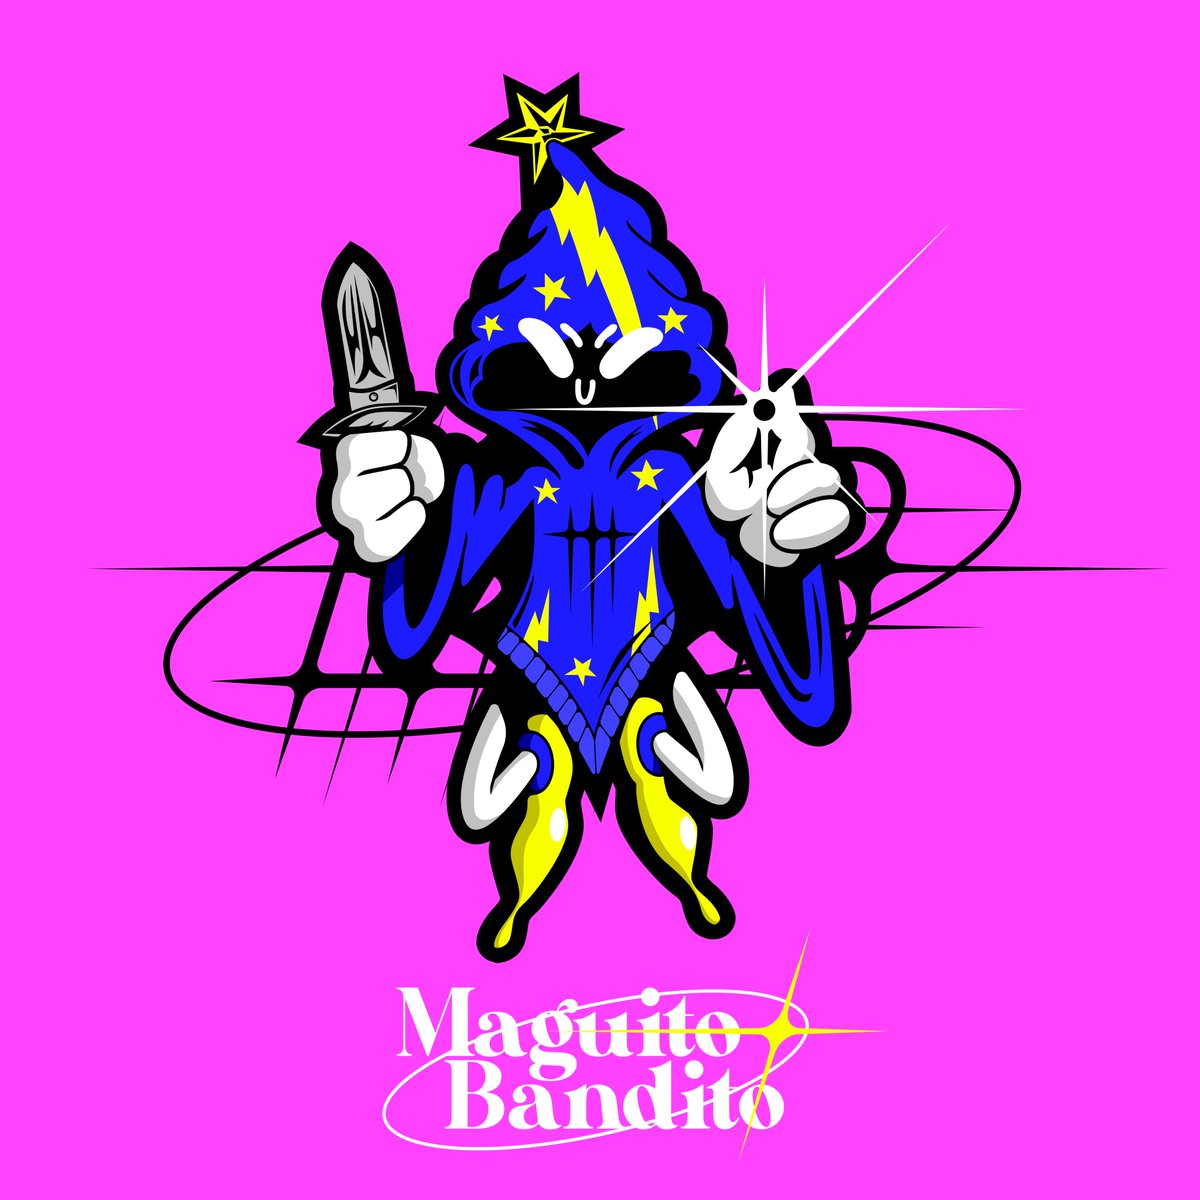 Maguito Bandito ✨🗡️ Te roba tus dulces.

#magic #maguitobandito #MalditoBandito #pink #magia #posteroftheday #sonrics #wizard #sweet